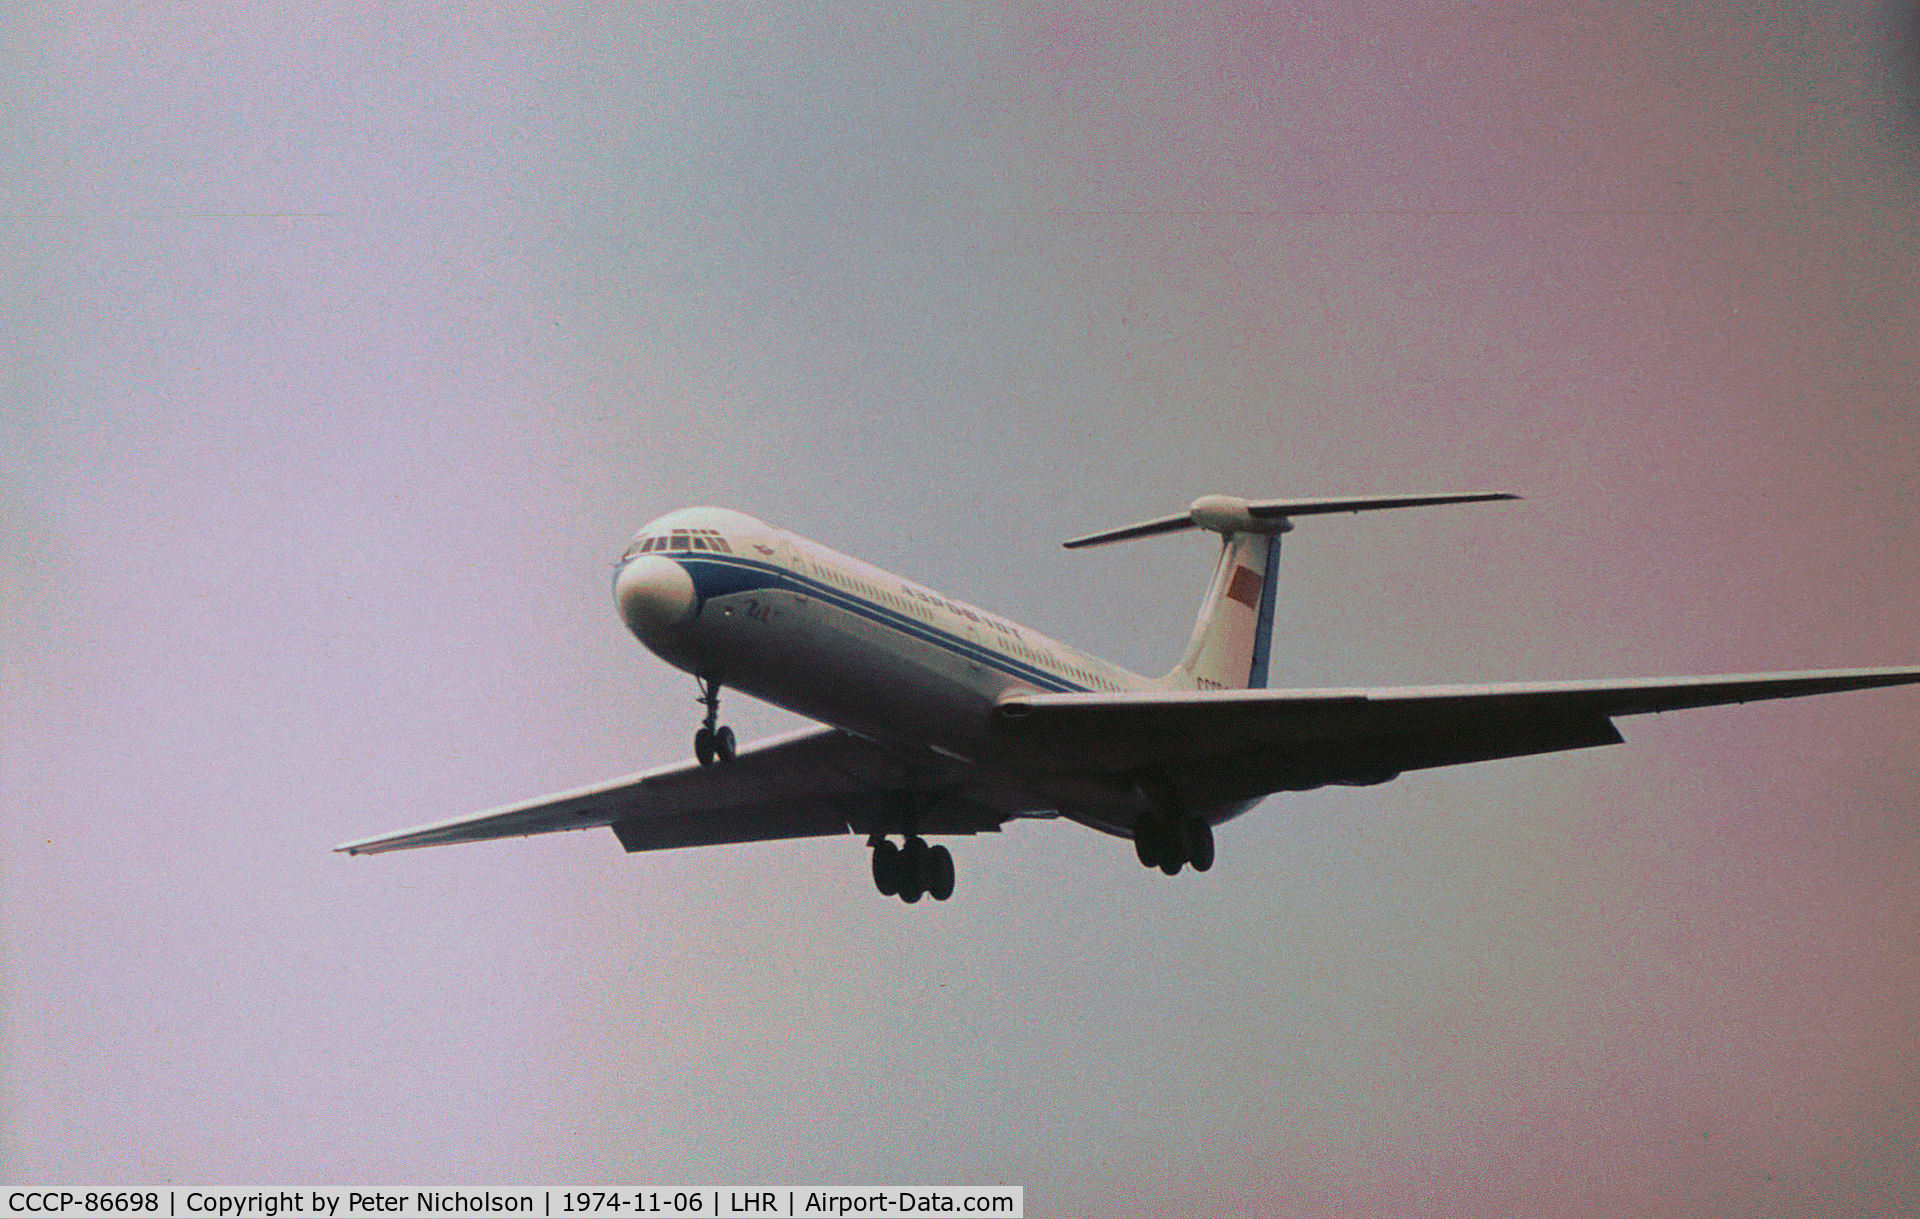 CCCP-86698, 1972 Ilyushin Il-62 C/N 21303, Ilyushin Il-62 Classic of Aeroflot on final approach to Heathrow in November 1974.